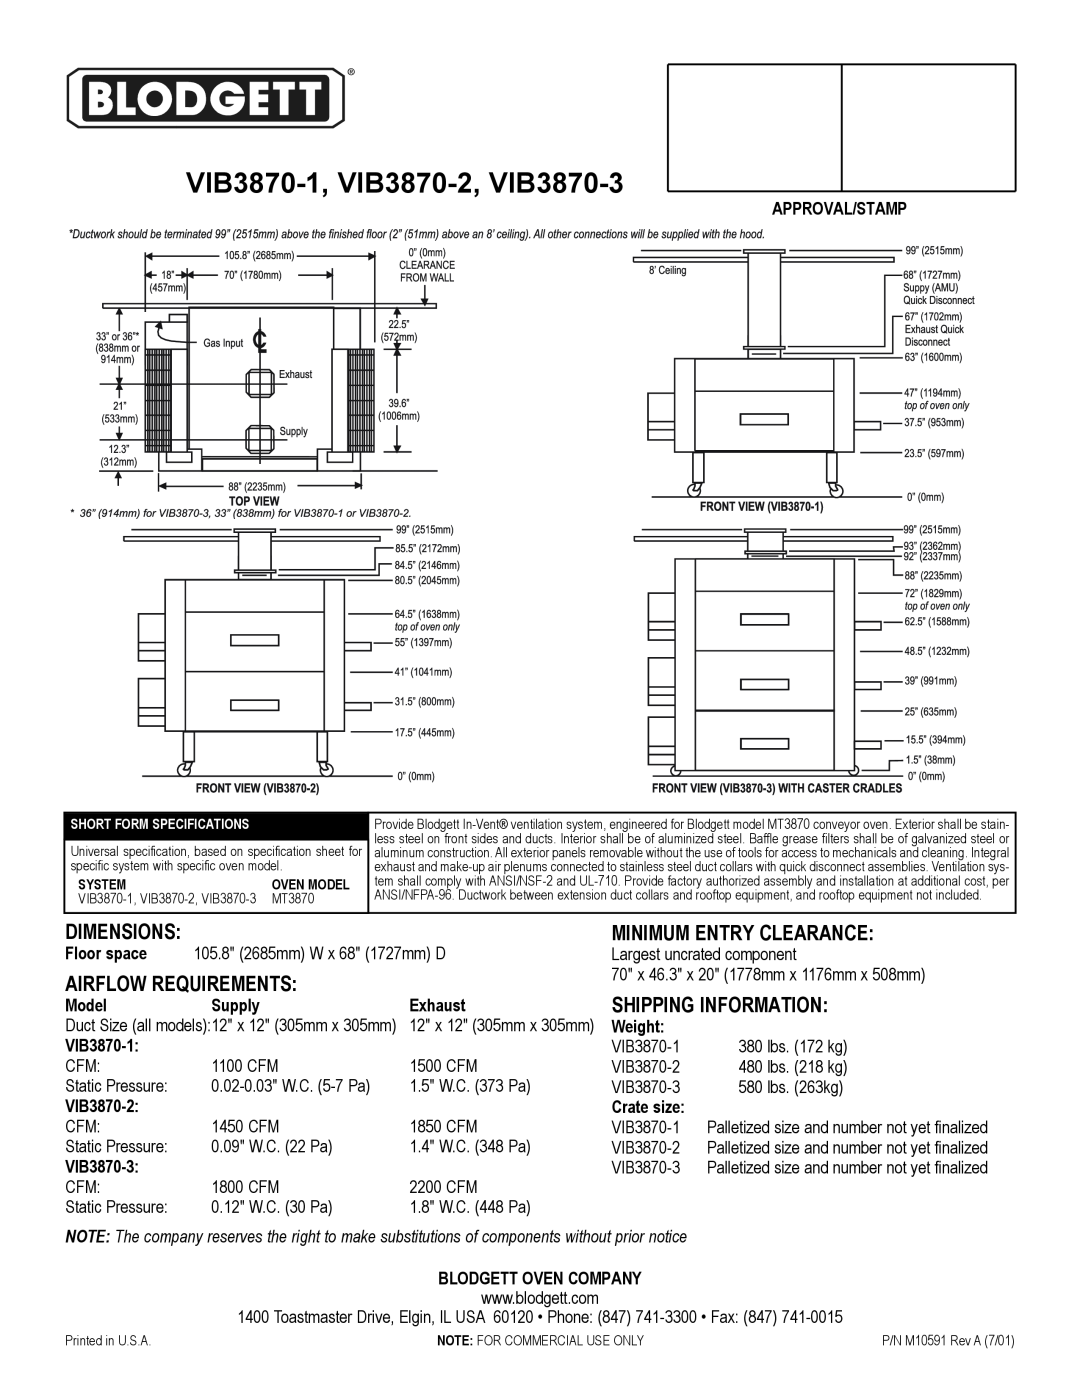 Blodgett VIB3870-1, VIB3870-2, VIB3870-3, Dimensions, Airflow Requirements, Minimum Entry Clearance, Approval/Stamp 